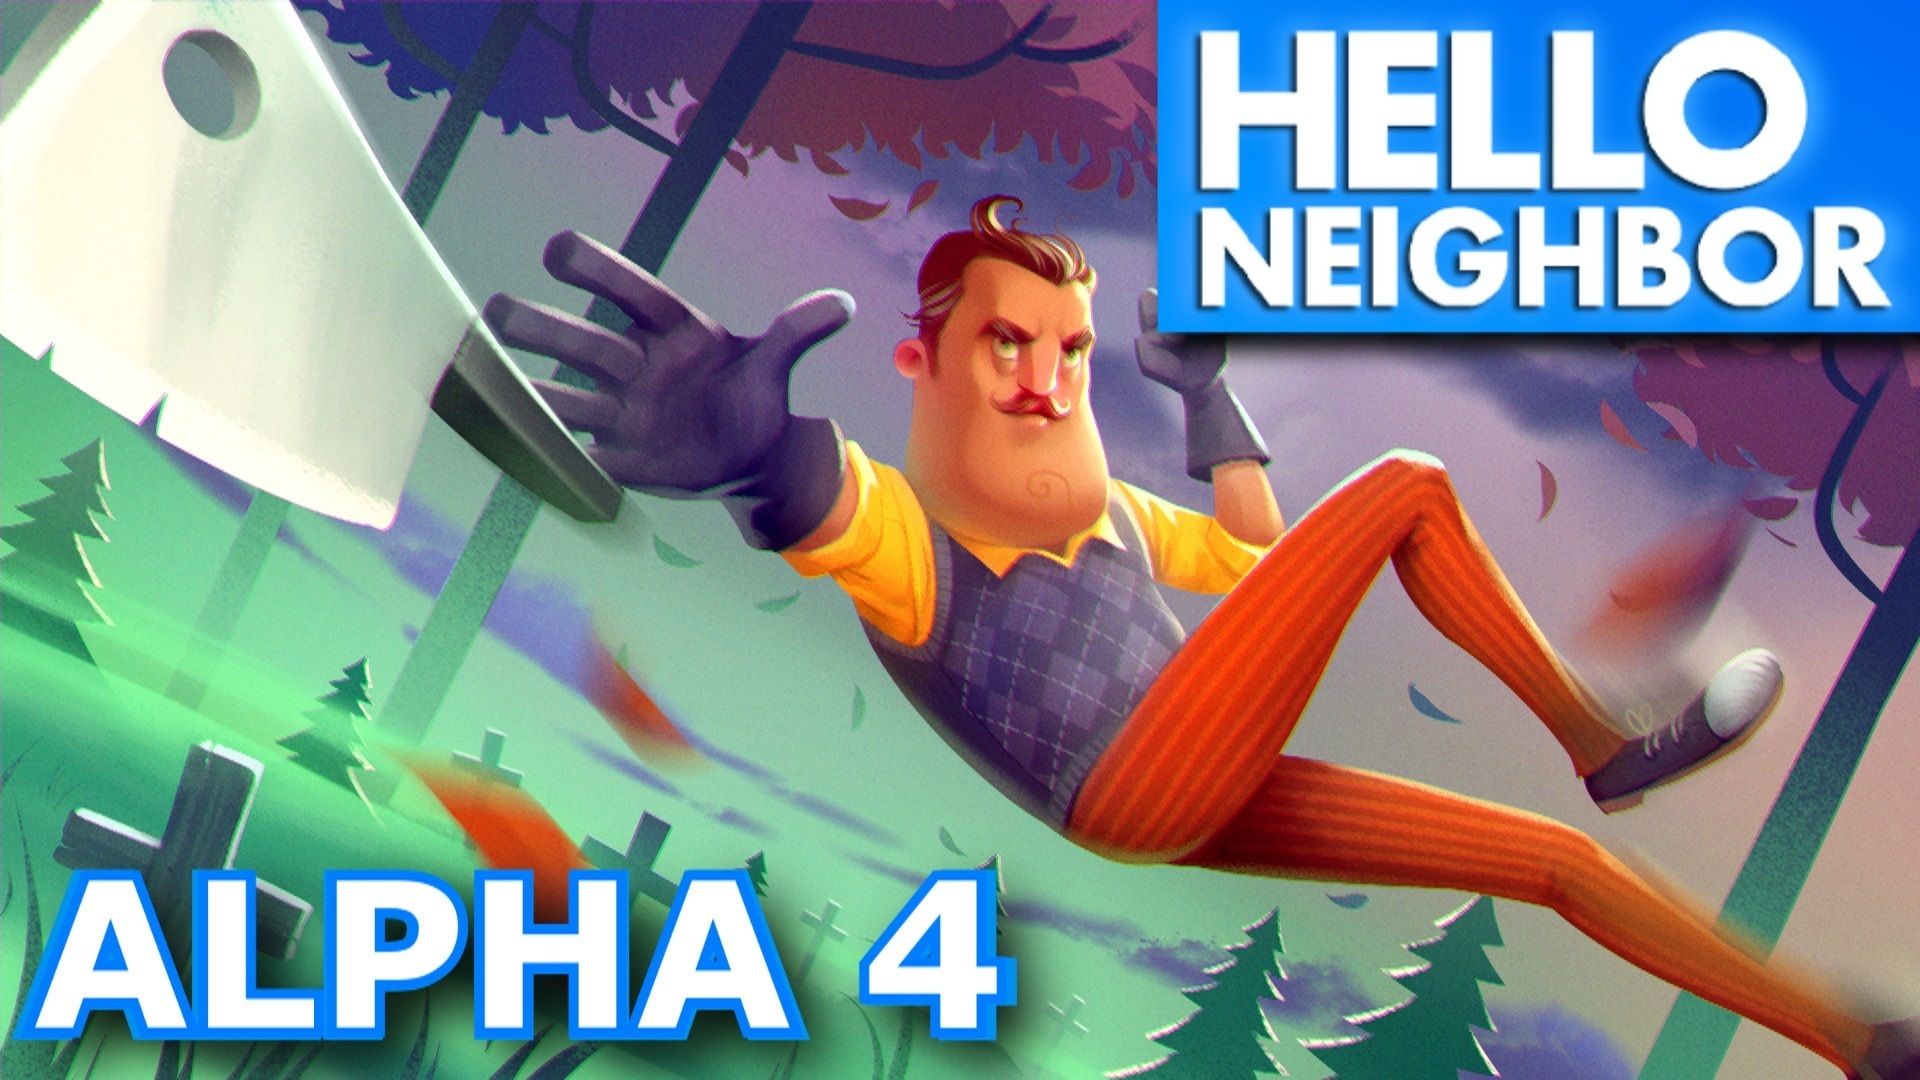 buy hello neighbor alpha 4 x box